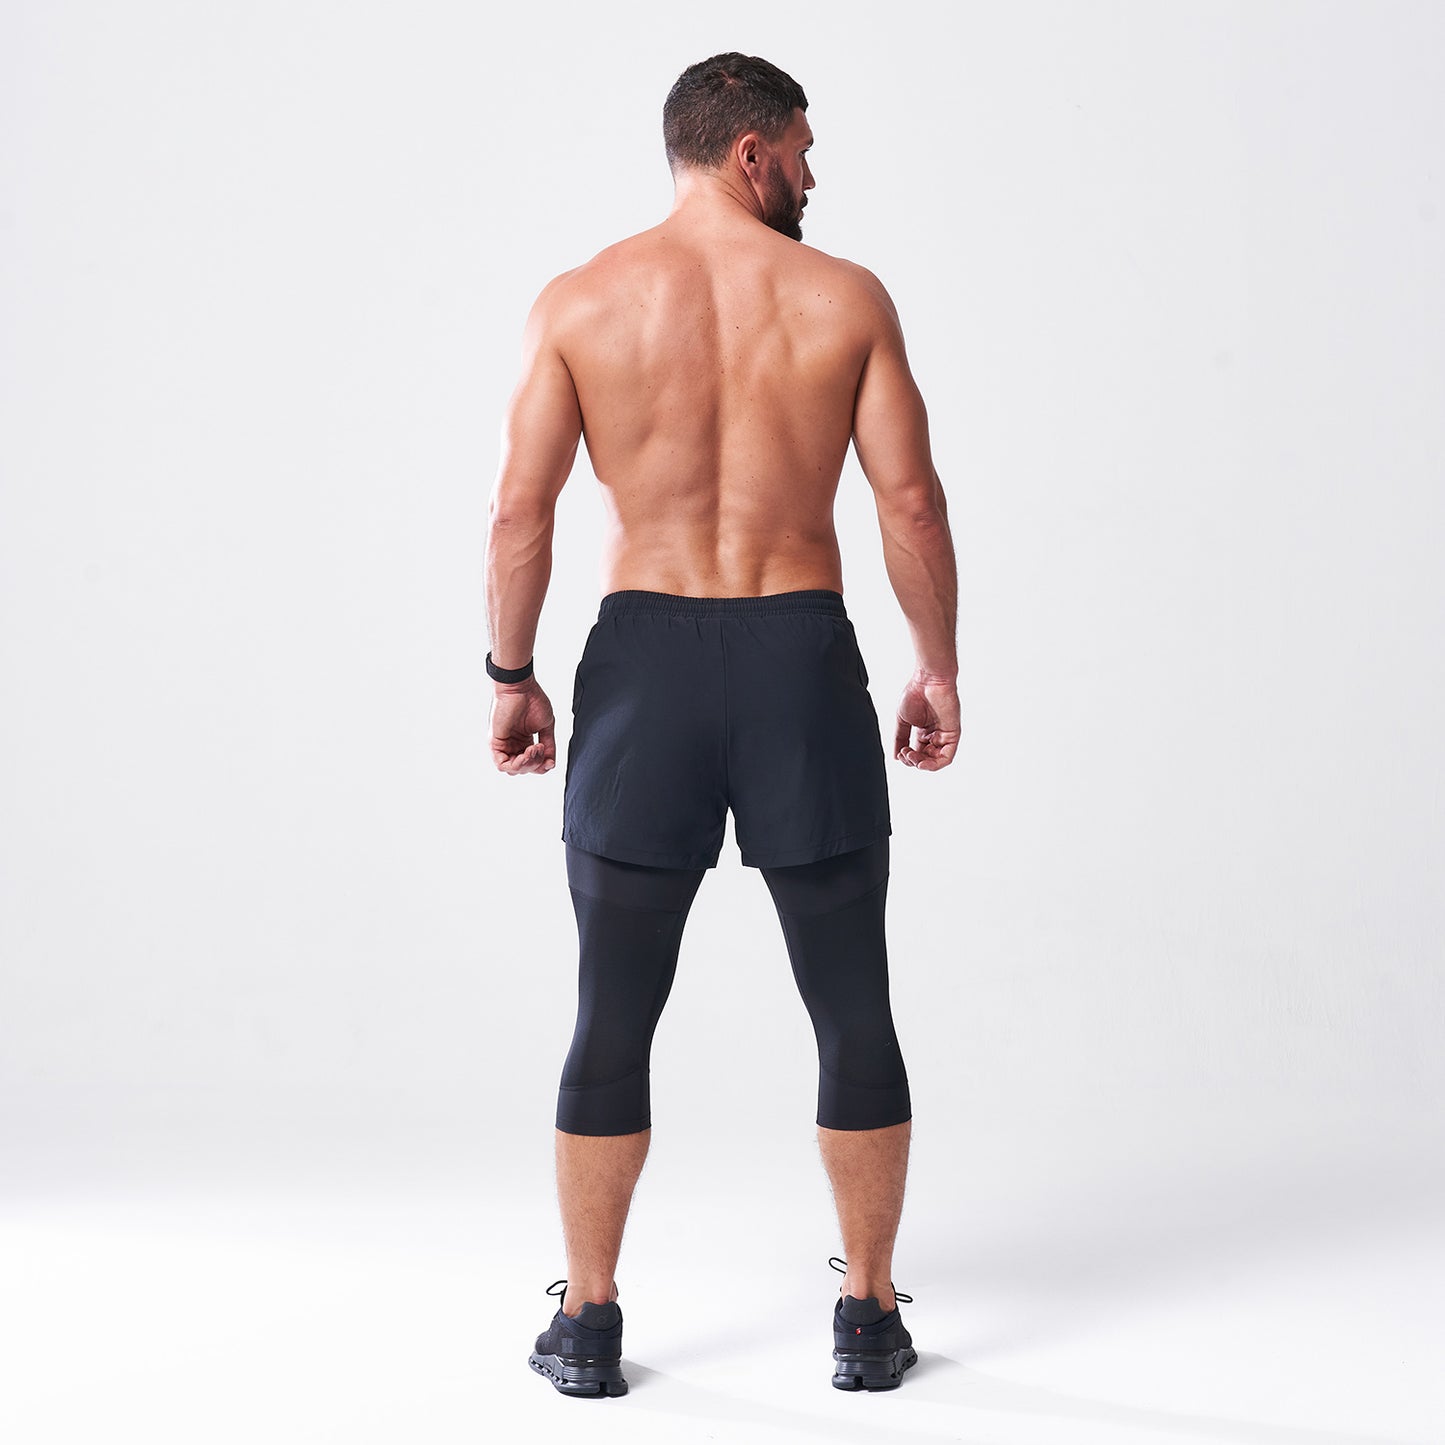 squatwolf-gym-wear-lab-360-2-in-1-legging-shorts-black-workout-shorts-for-men